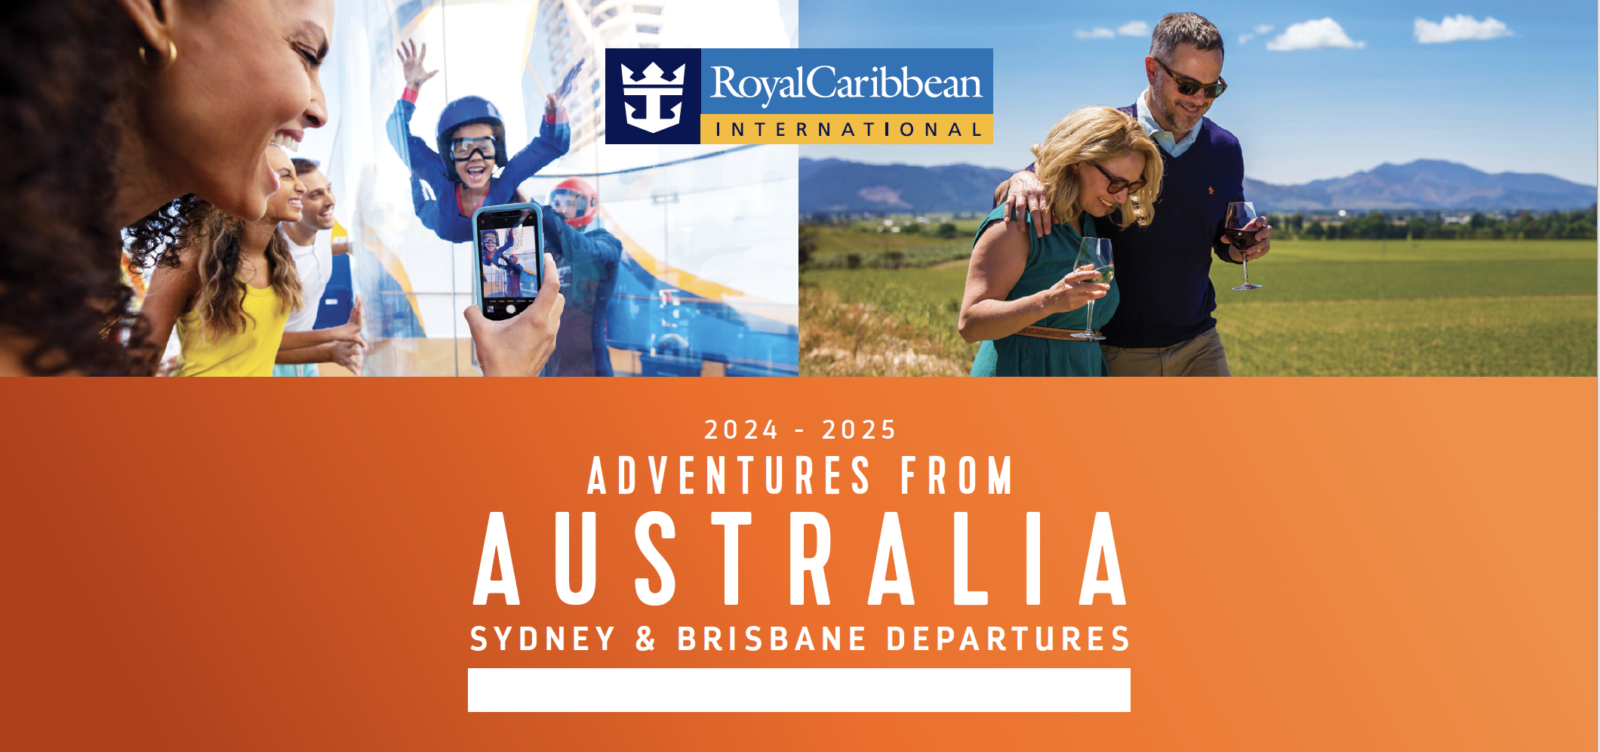 Royal Caribbean Australia 24/25